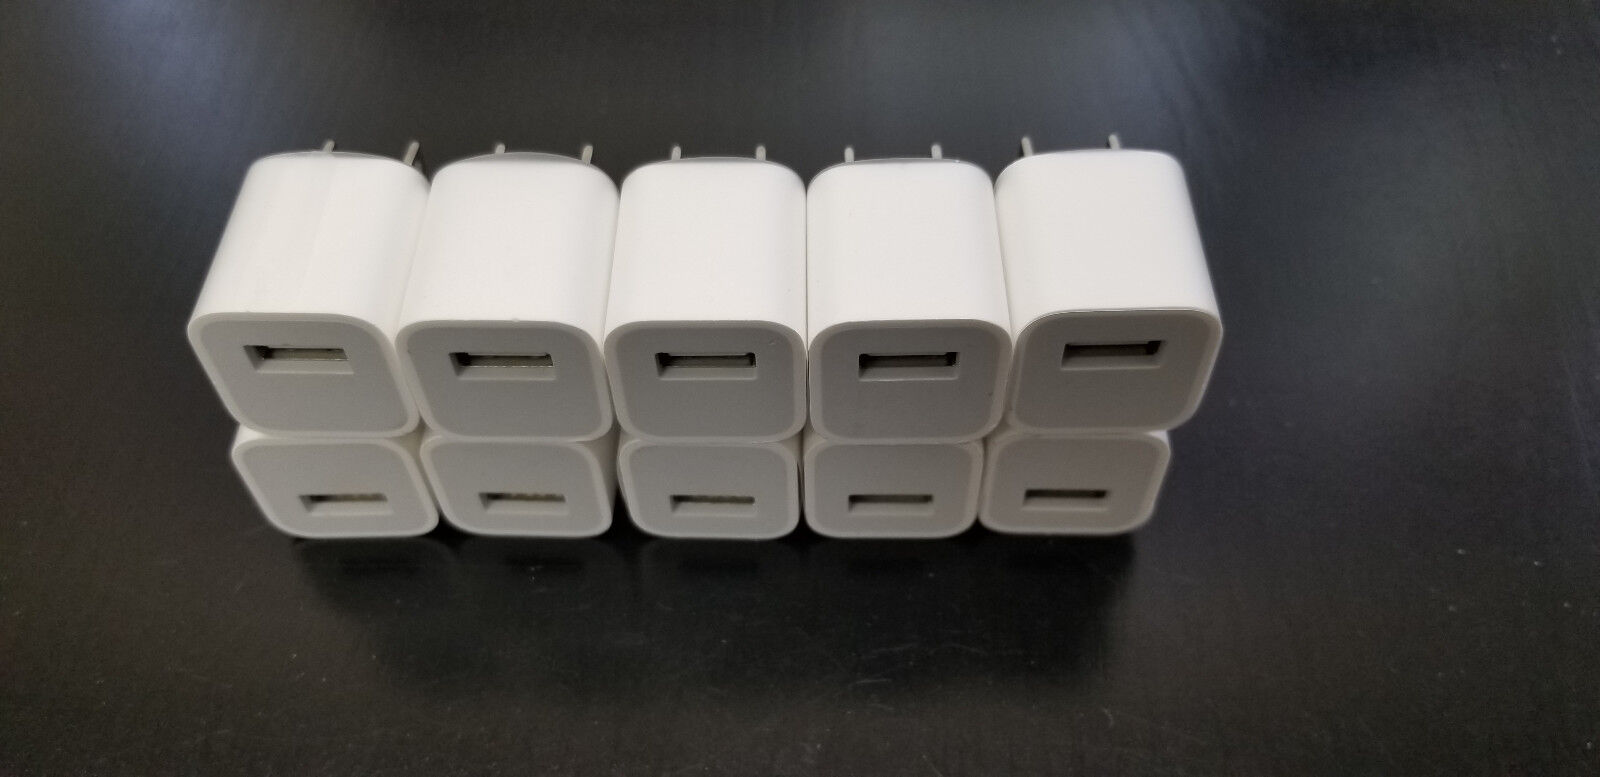 Apple iPhone USB Power Wall Cube OEM Charger Adapter Block XS/XR/11/8+/7/6 (10x) Apple A1385 - фотография #3